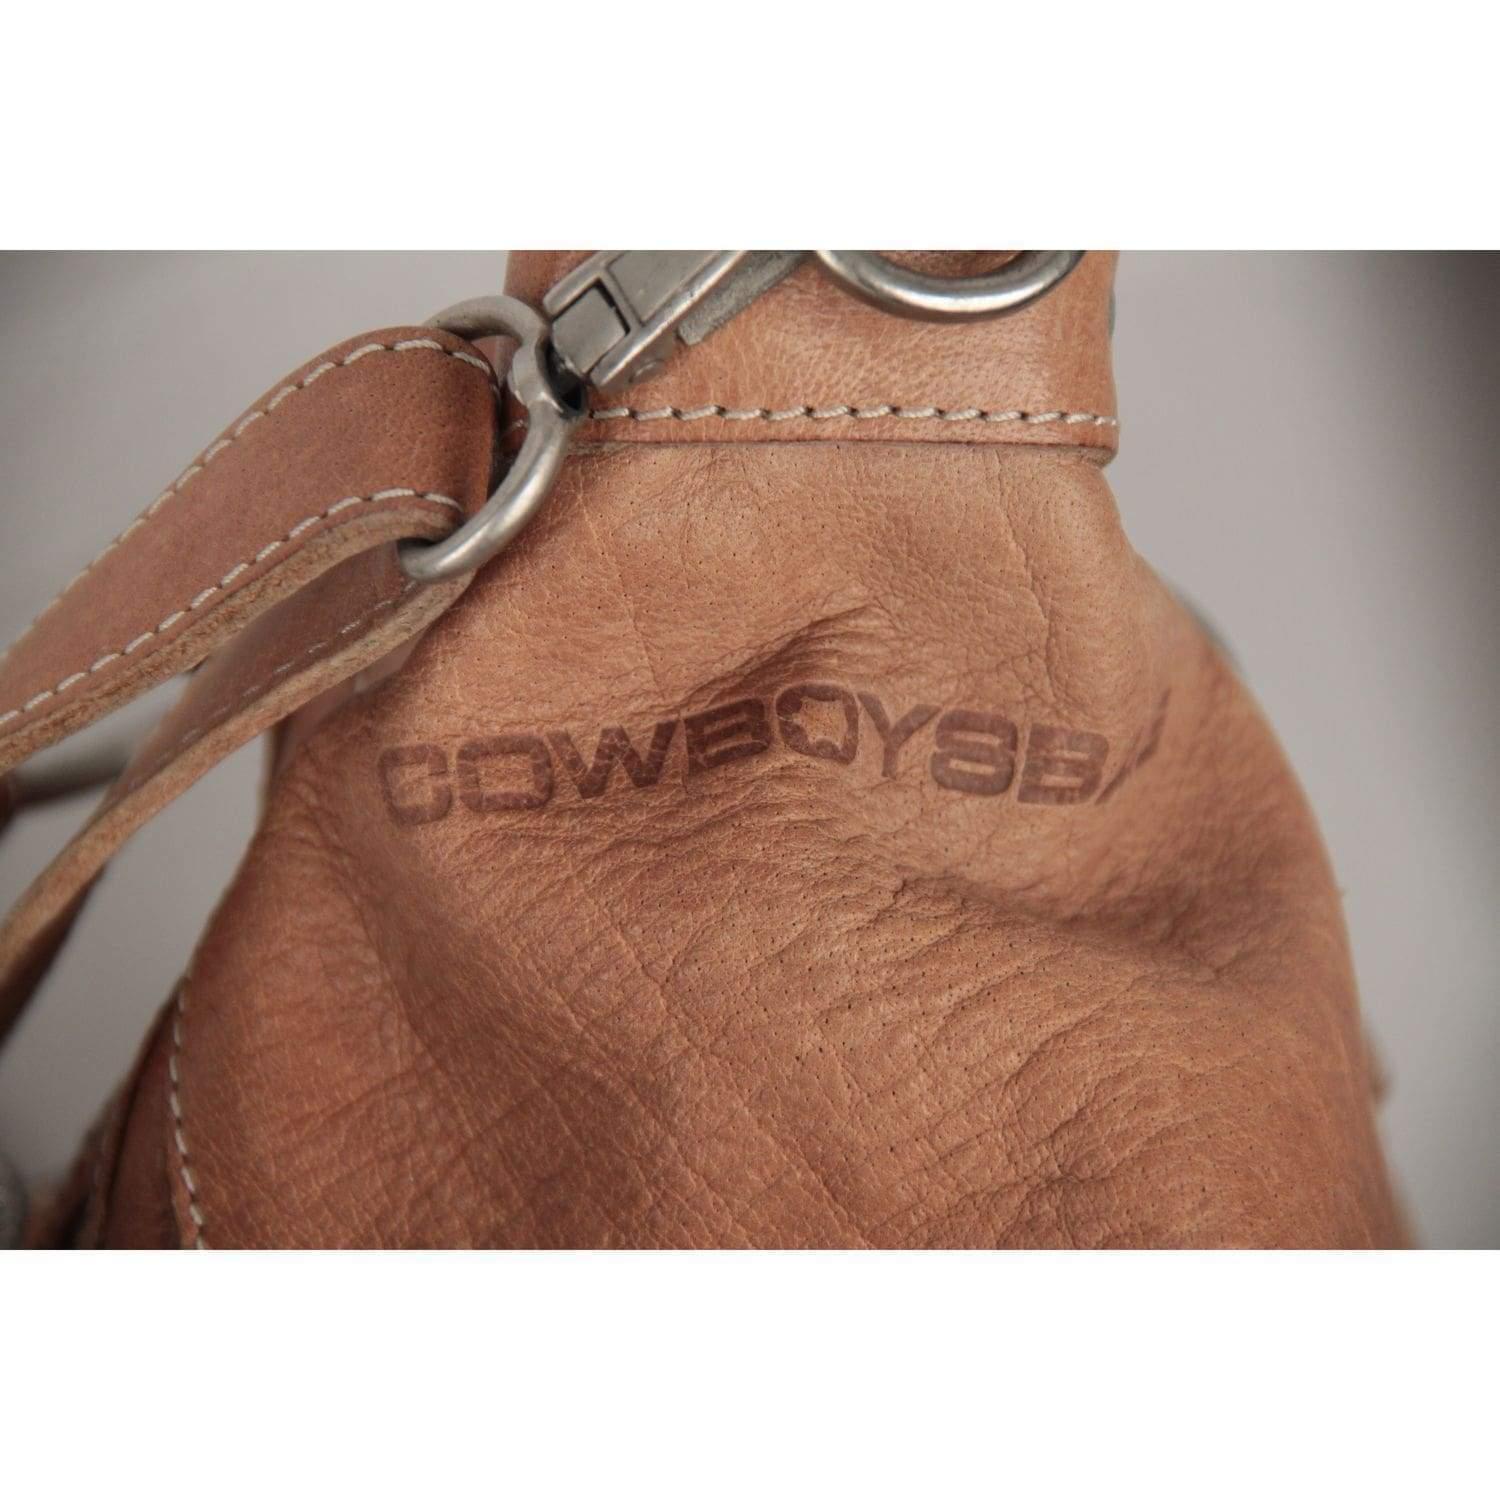 COWBOYSBAG Tan Leather Tote Urban Shoulder Bag with Strap 1